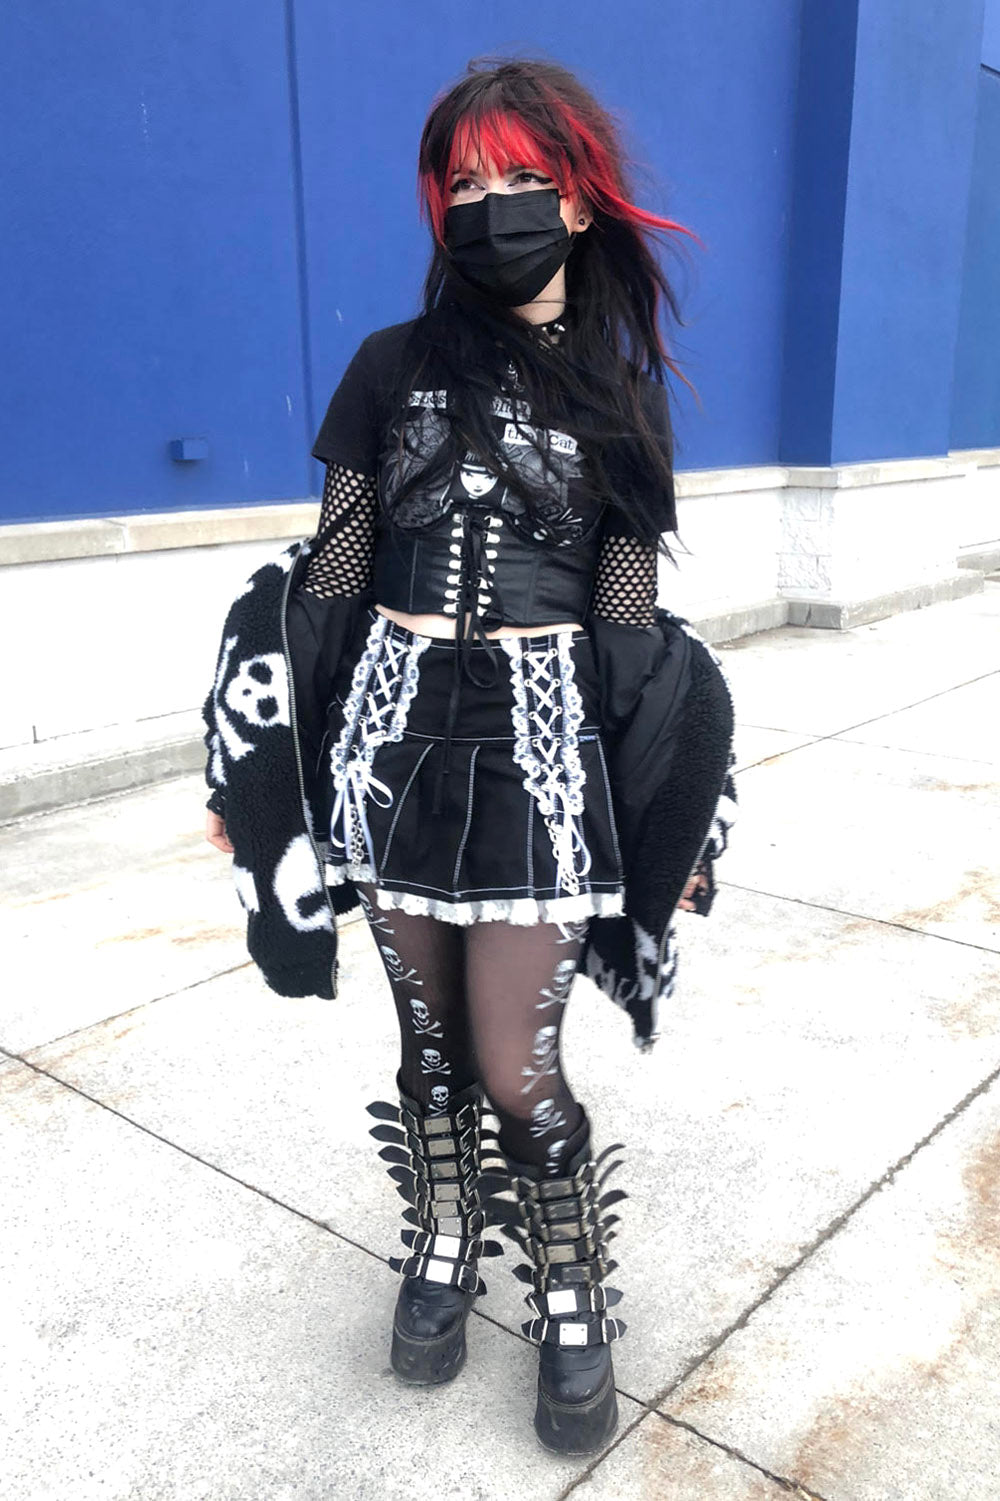 Lolita Pleated Skirt [Black/White]